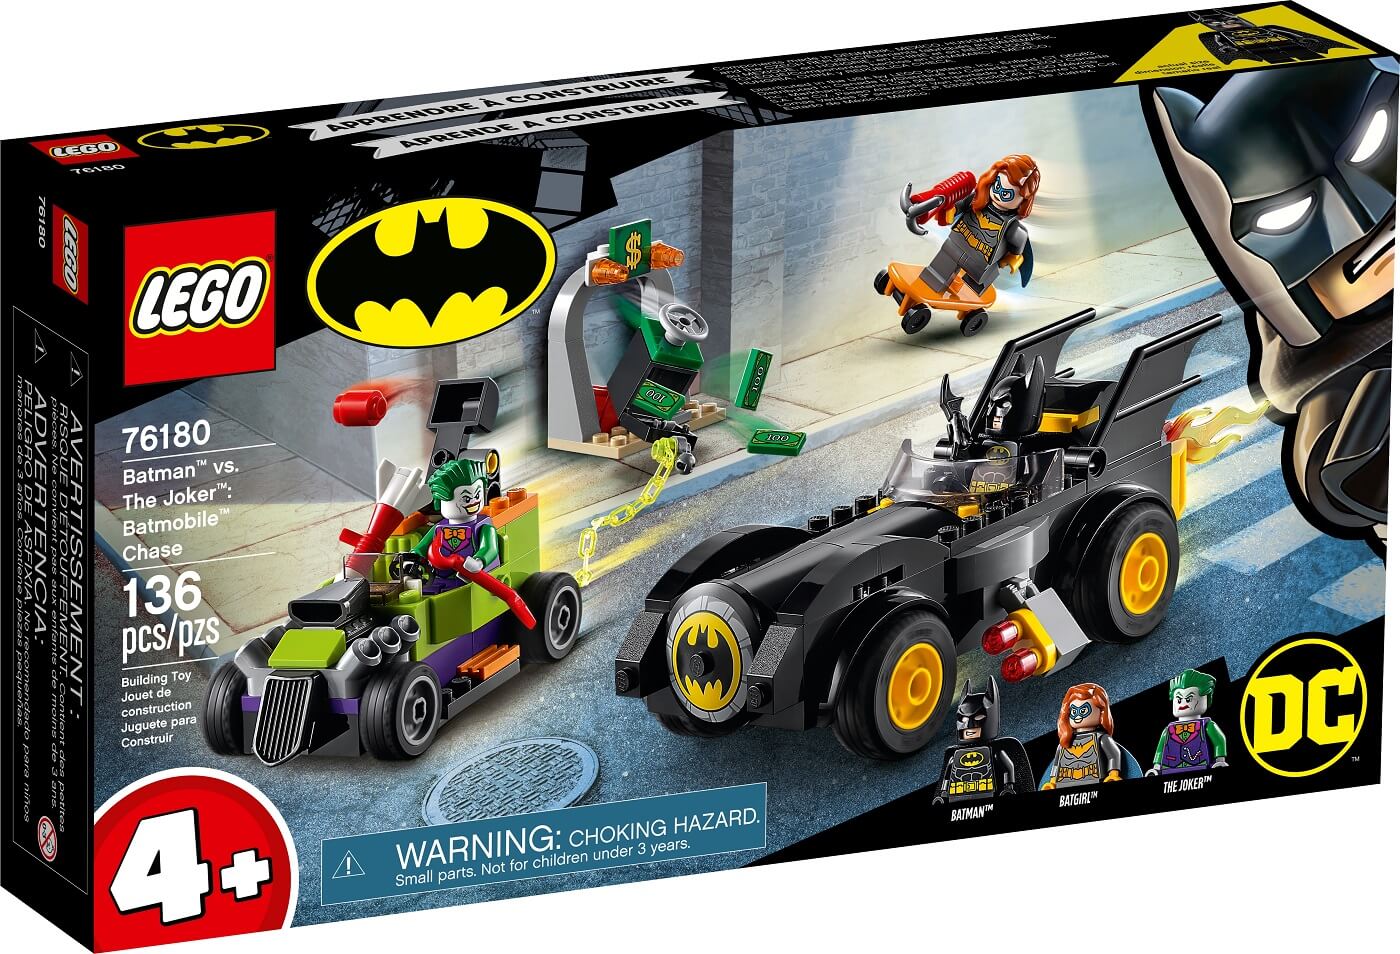 Batman vs The Joker Persecucion en el Batmobile ( Lego 76180 ) imagen h